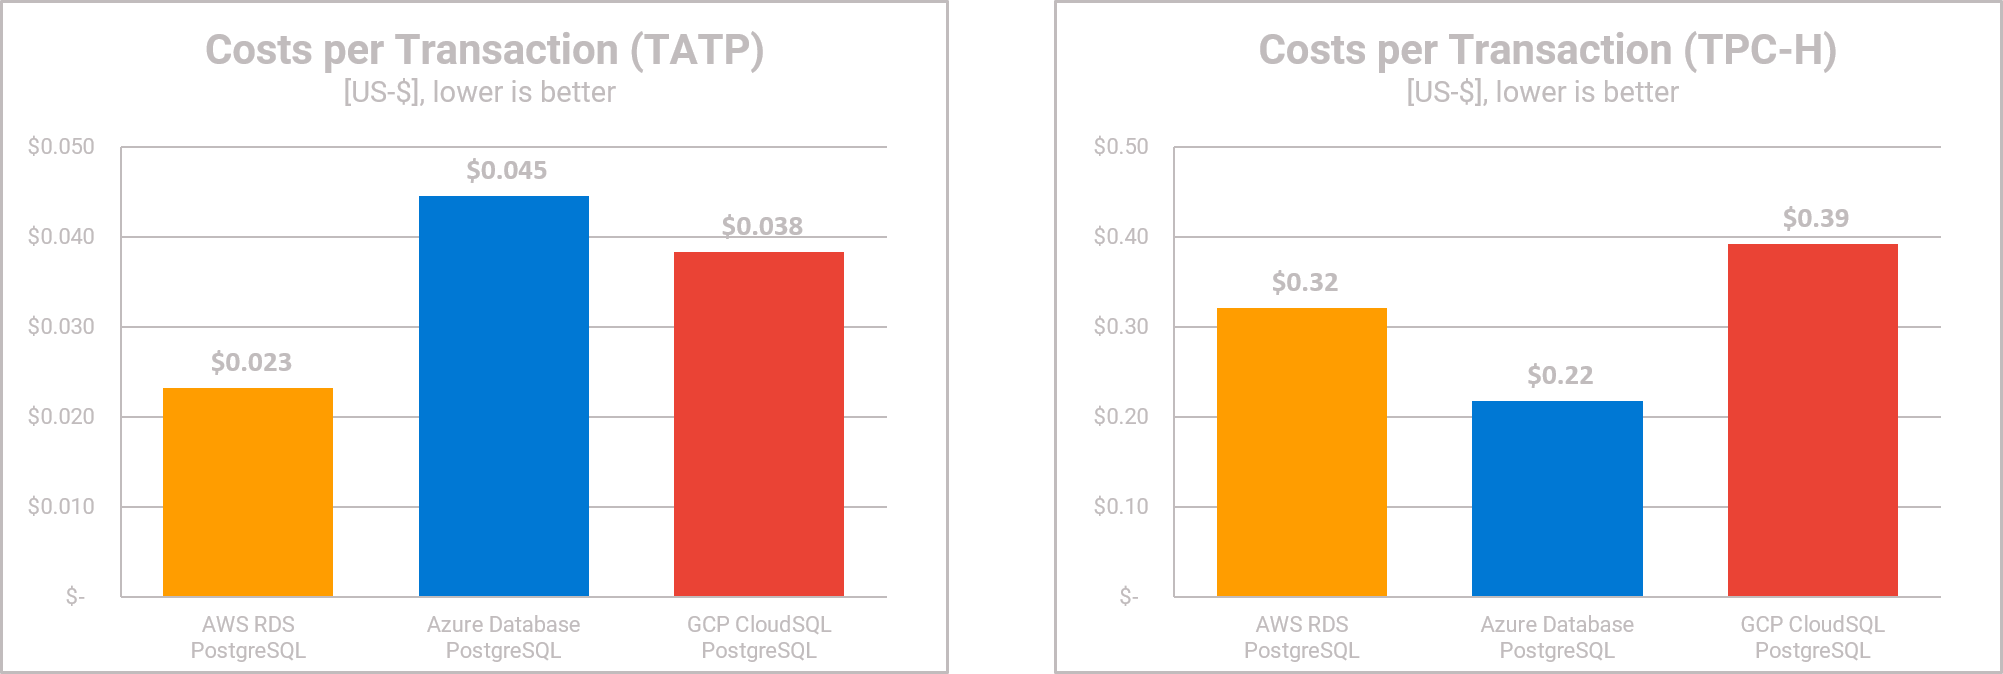 PostgreSQL DBaaS Comparison - Costs per Transaction -TATP & TPC-H